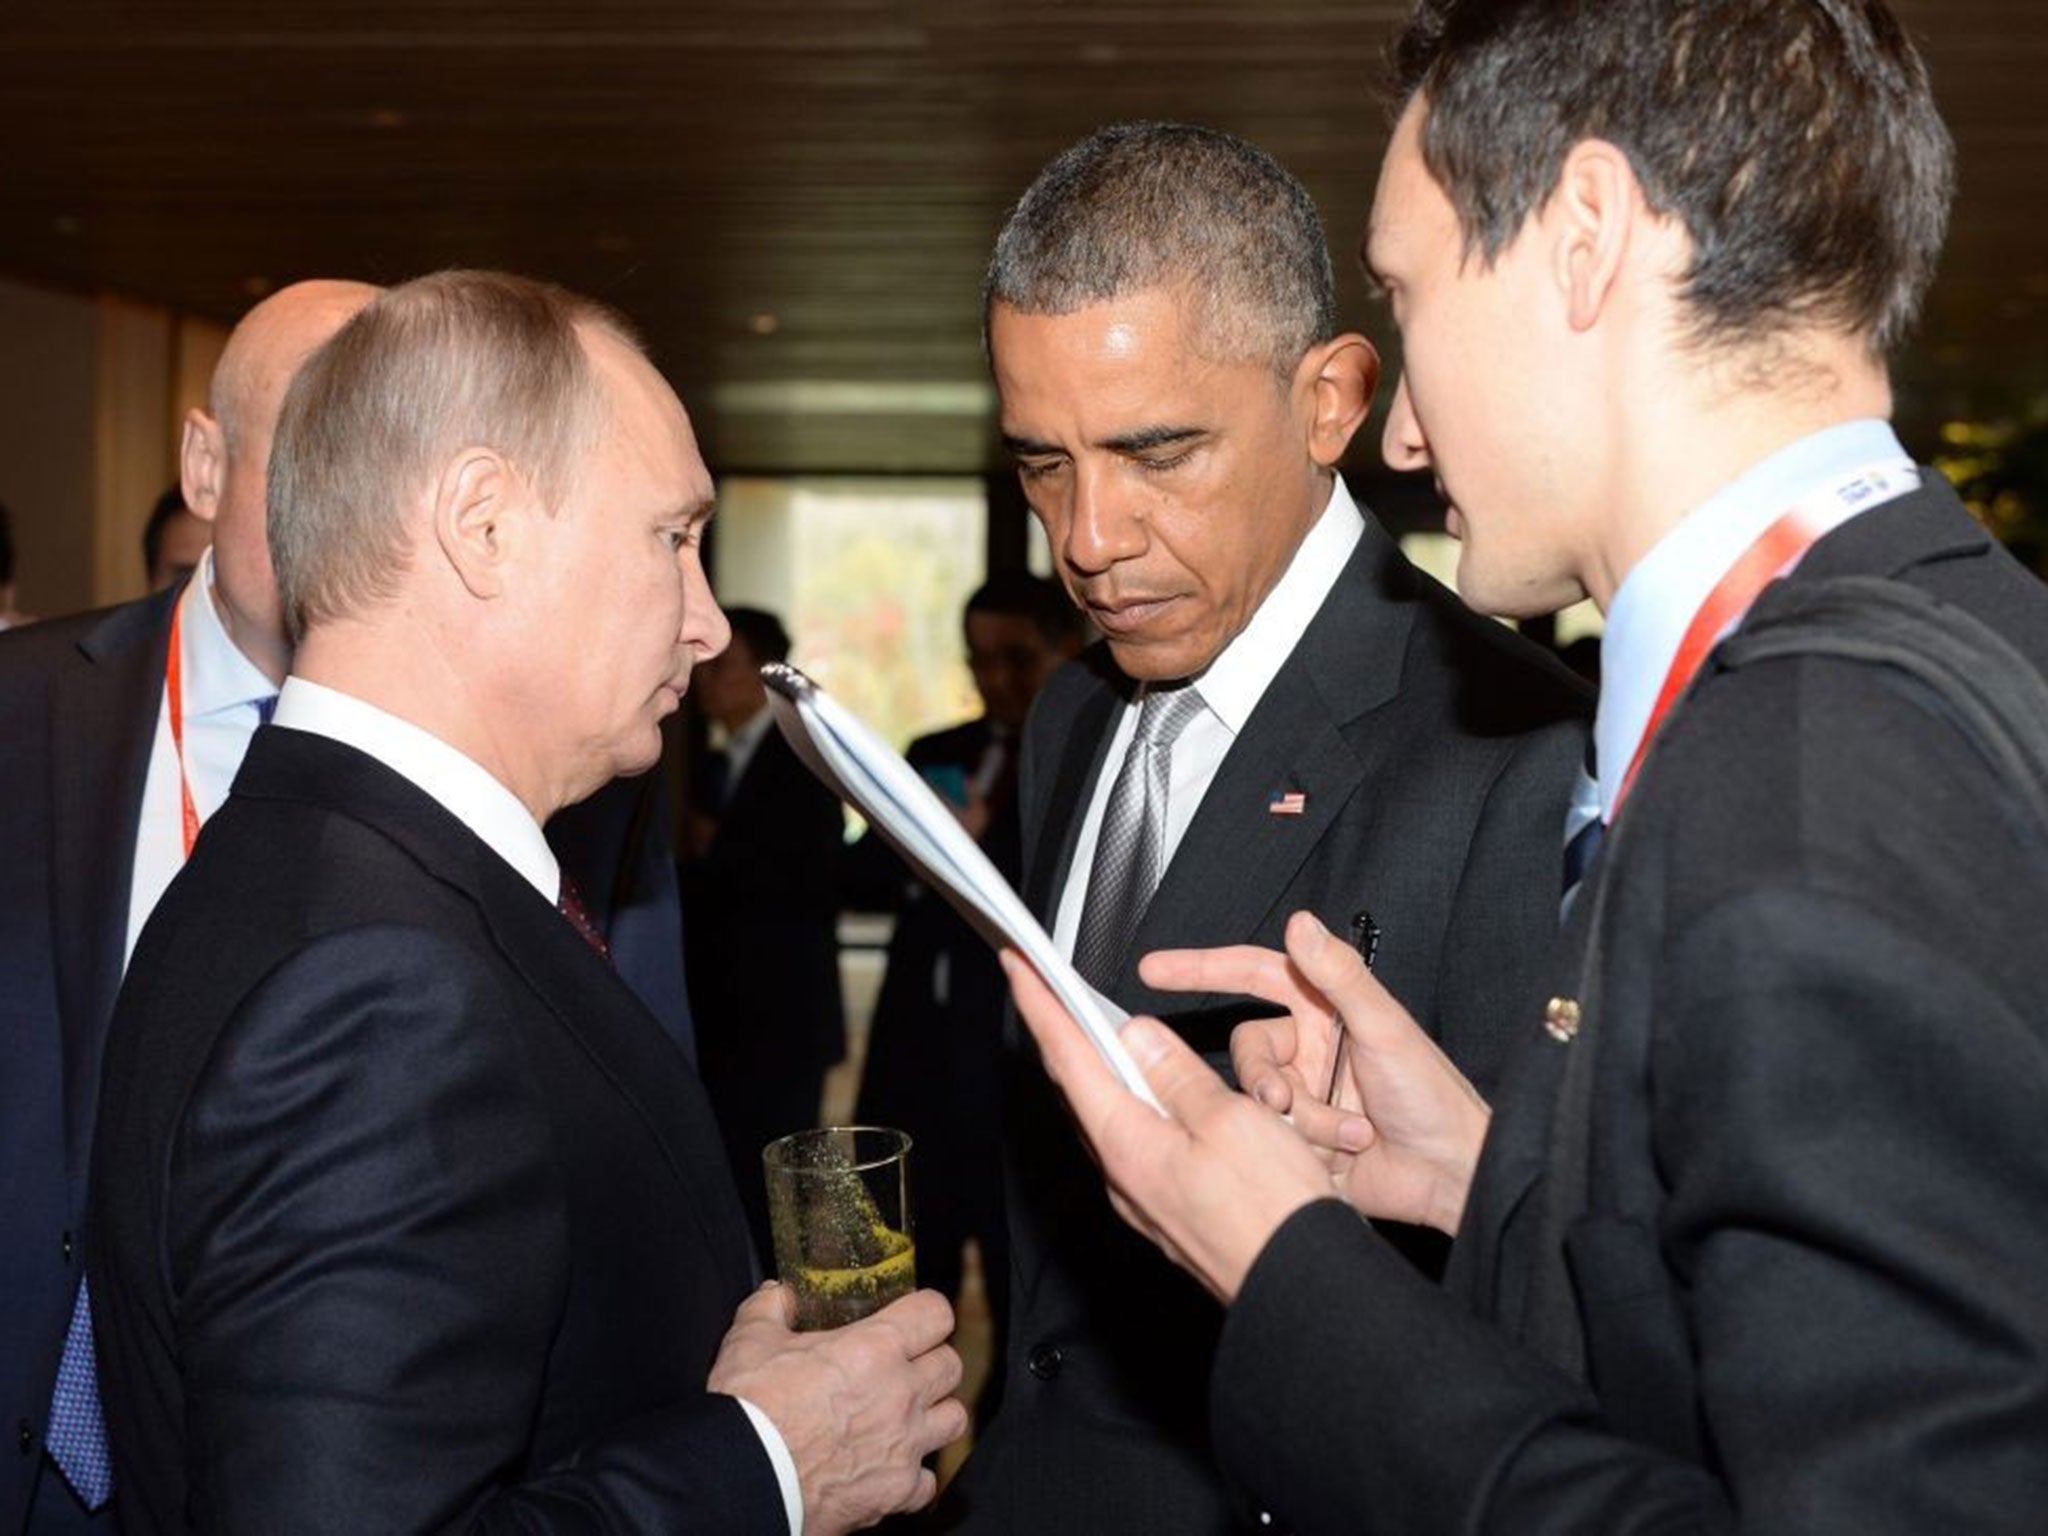 Vladimir Putin speaks with US President Barack Obama during the Apec summit in November, 2014